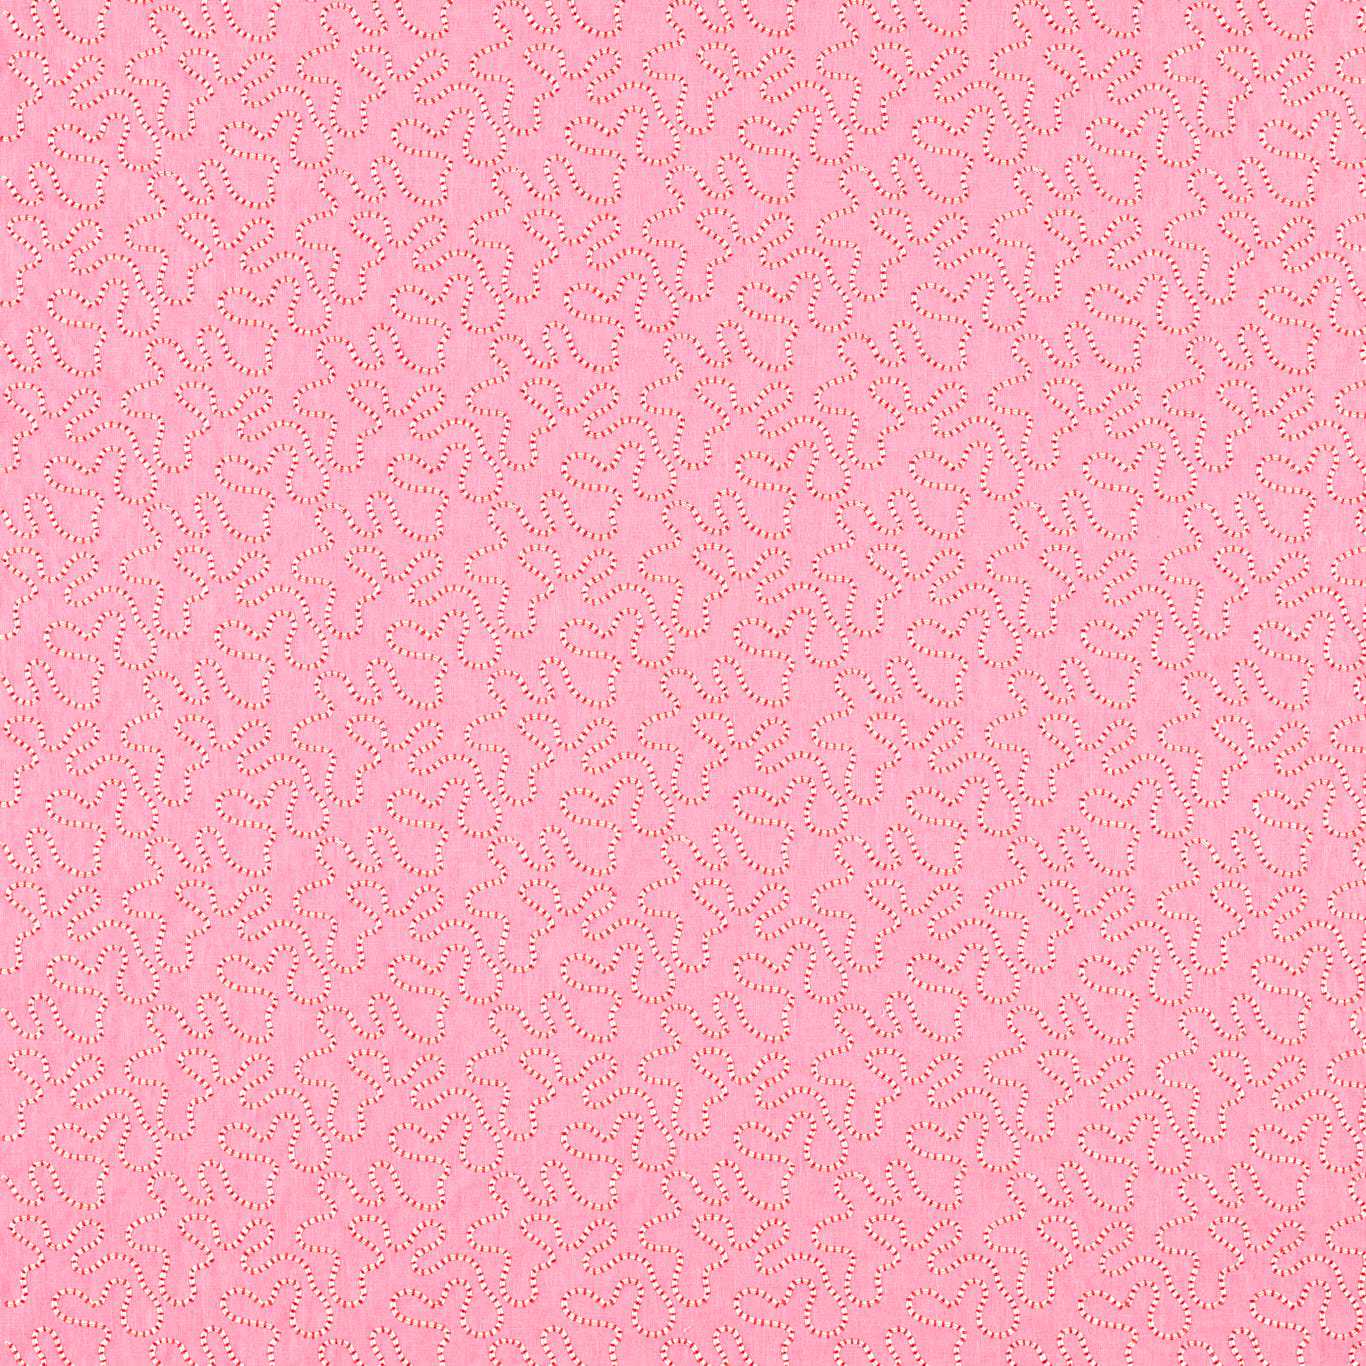 Wiggle Fabric - Rose Quartz/Ruby